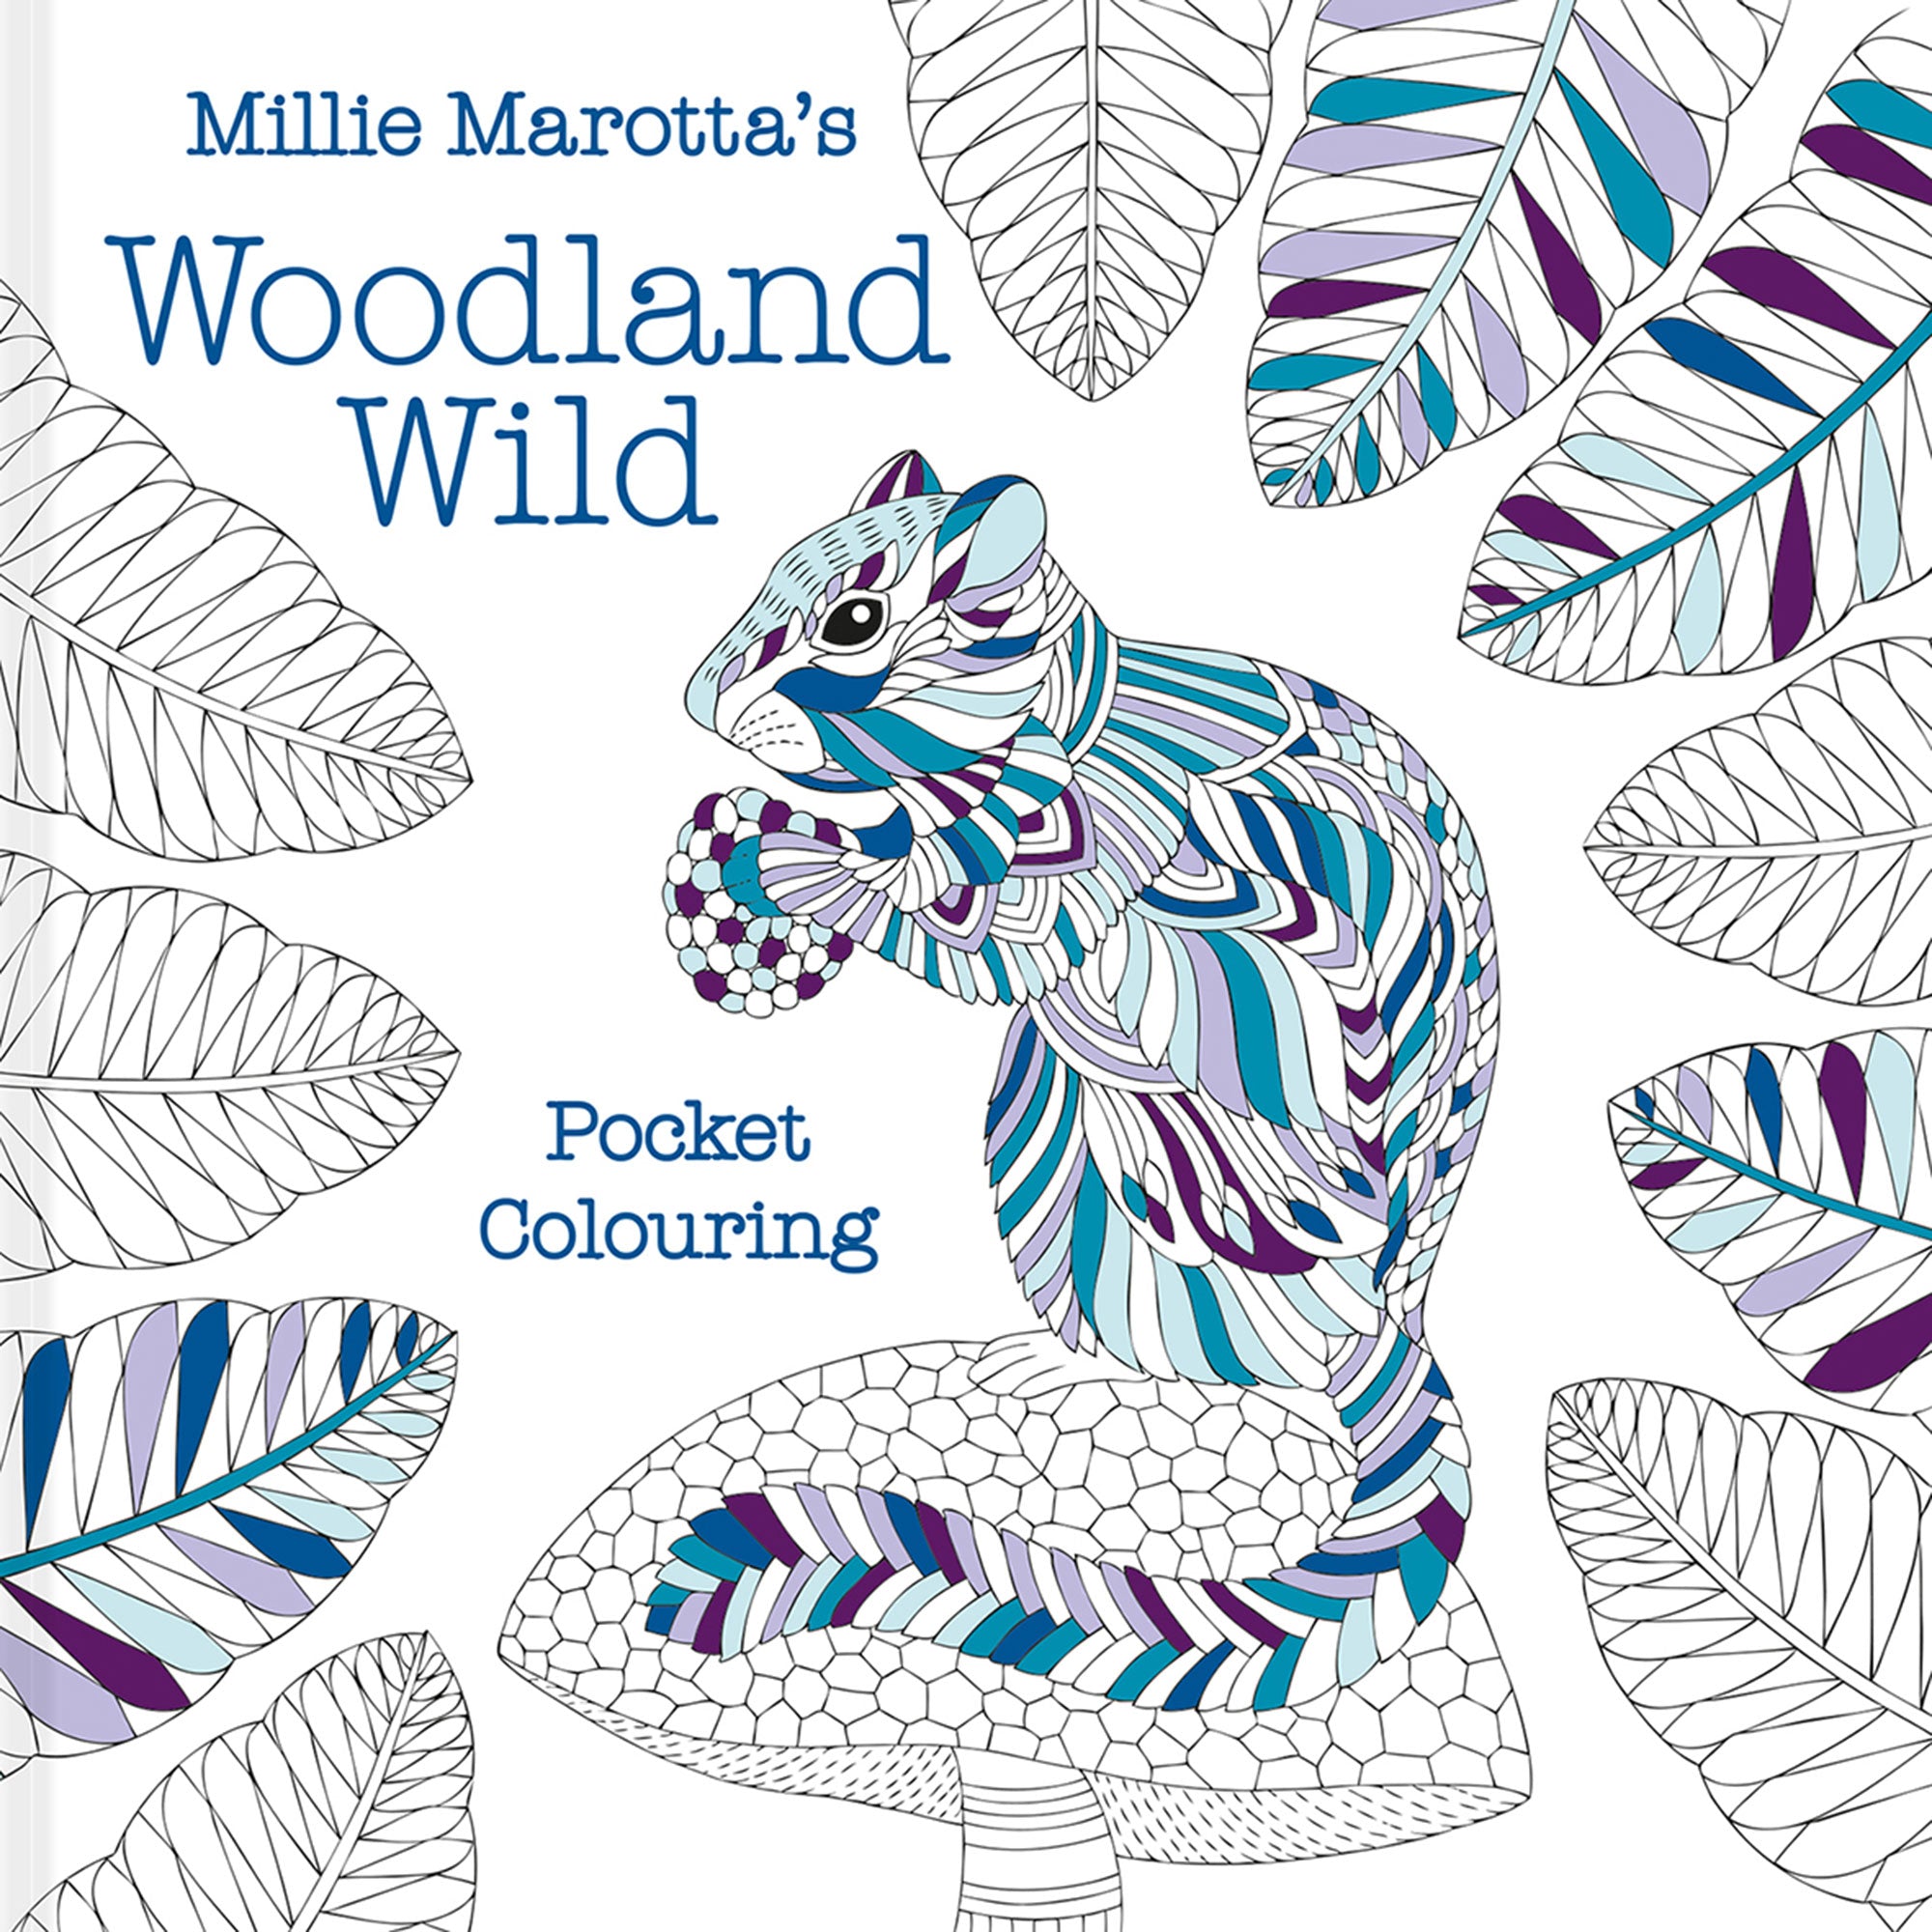 Millie Marotta's Woodland Wild Pocket Colouring Book